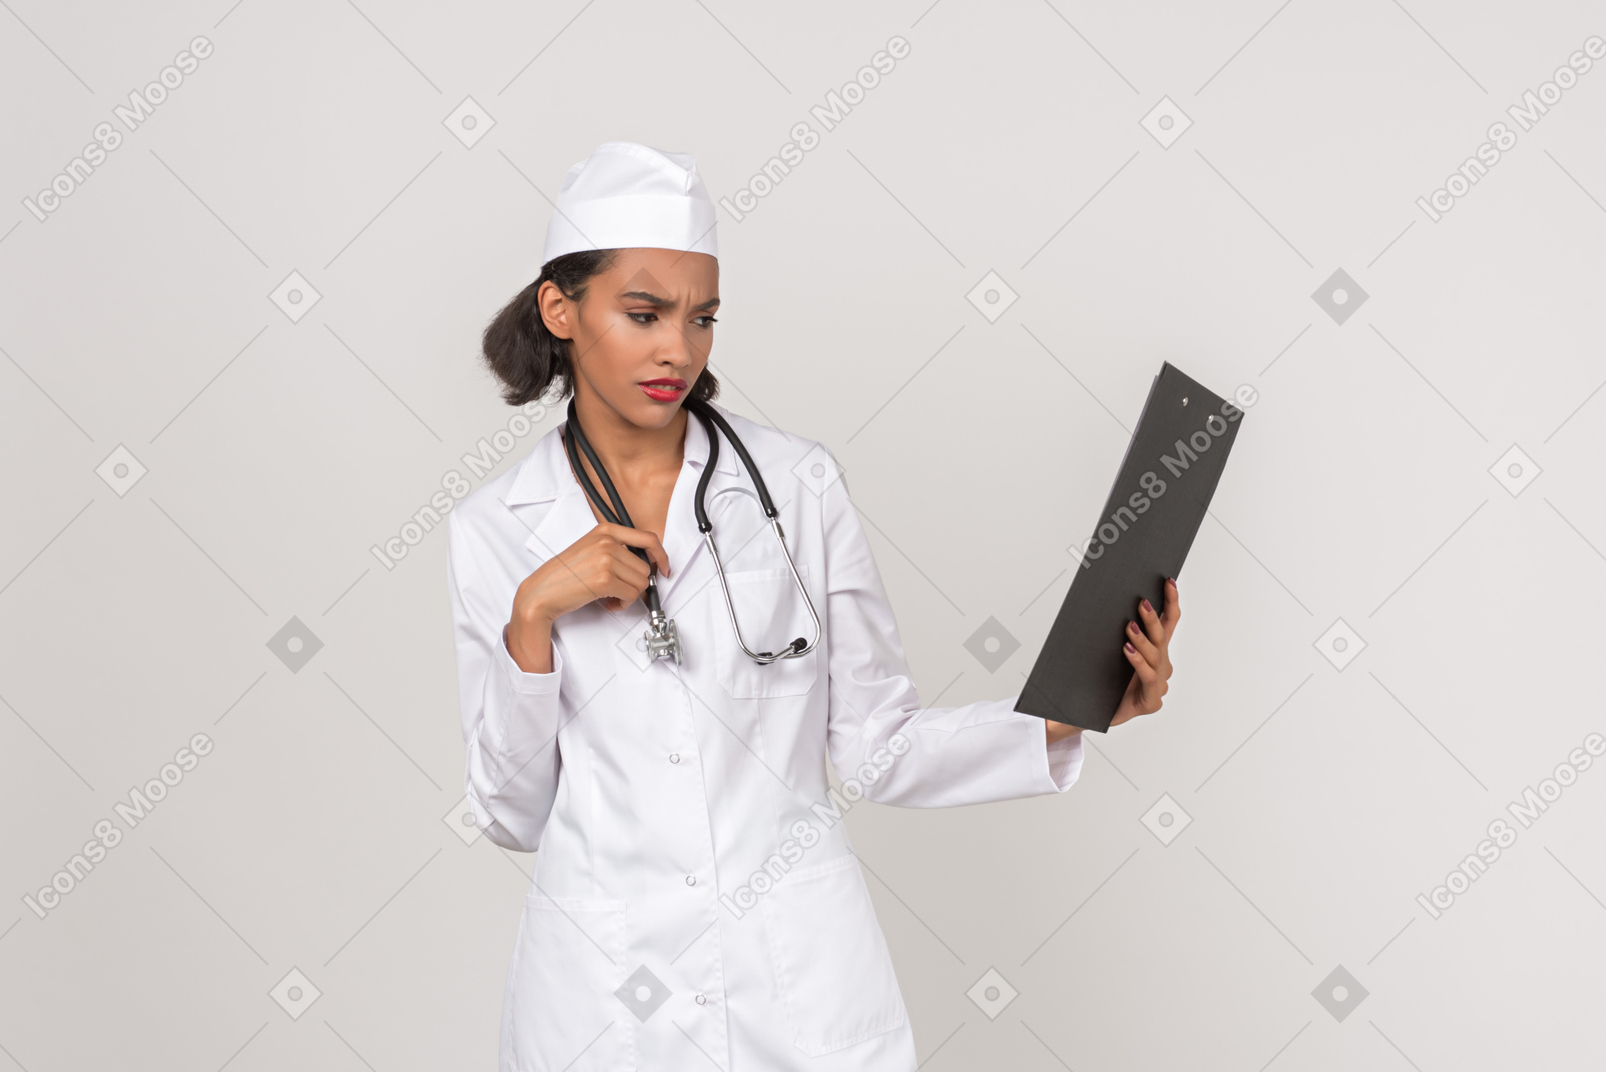 Attractive female doctor looking worried